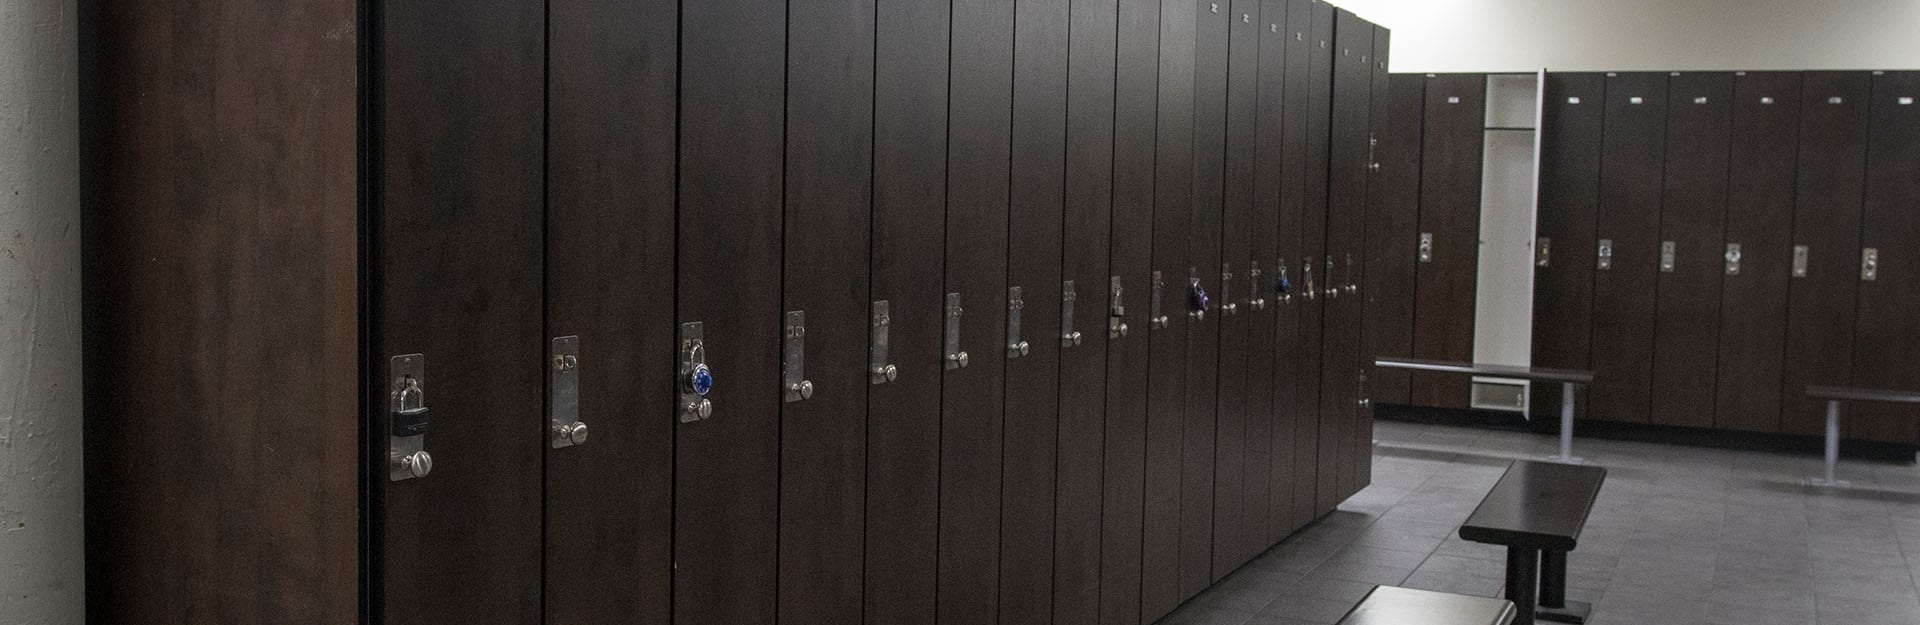 spacious locker rooms in modern gym